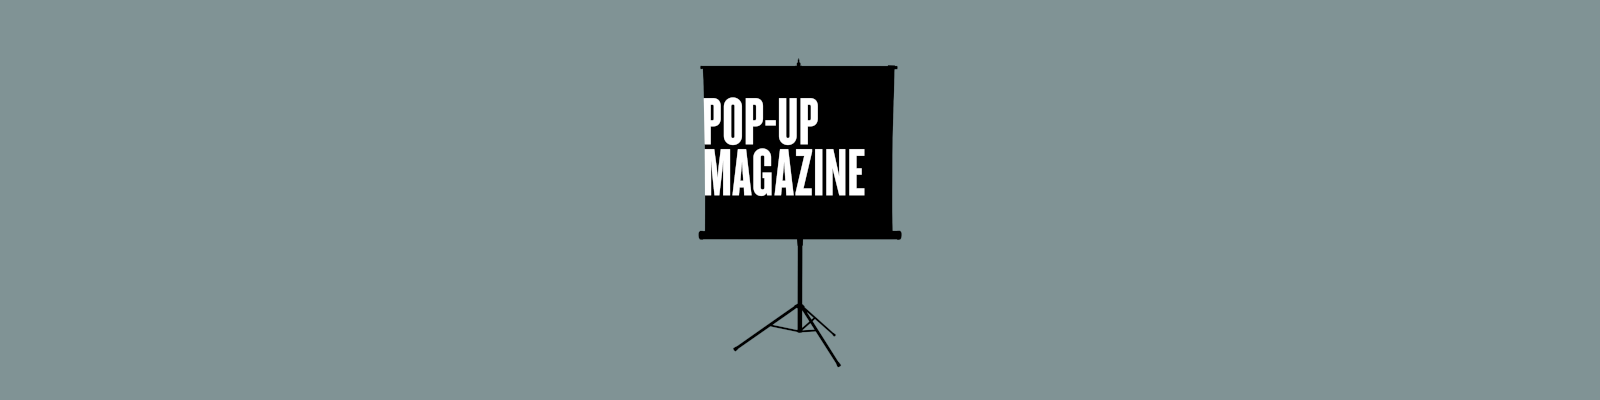 Pop-Up Magazine Presents